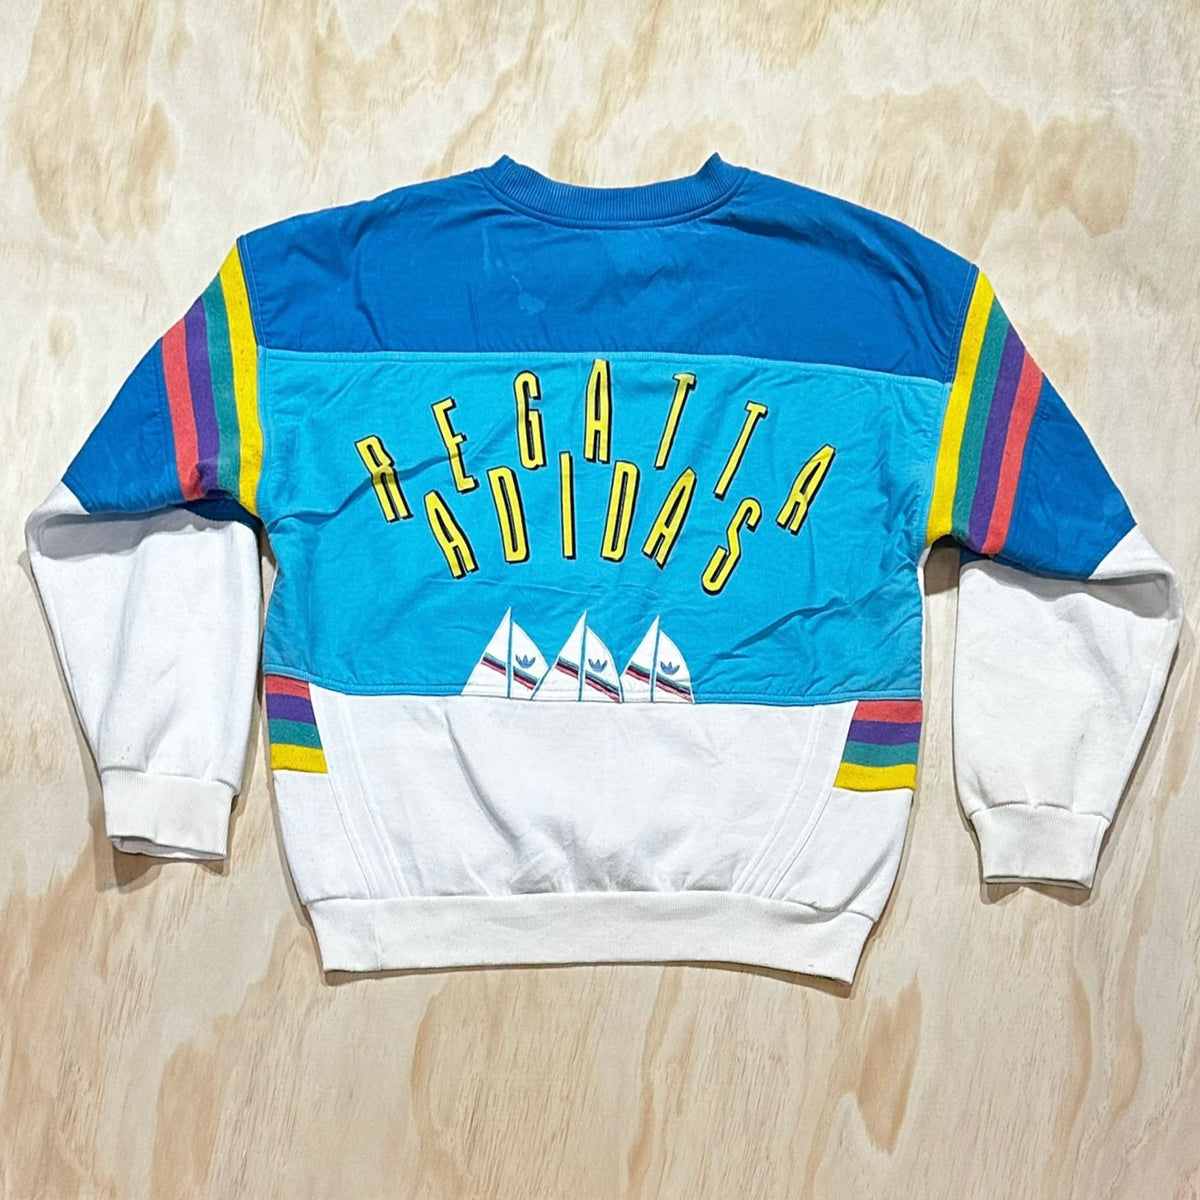 Vintage 80s ADIDAS crewneck Regatta Sailing Sweatshirt